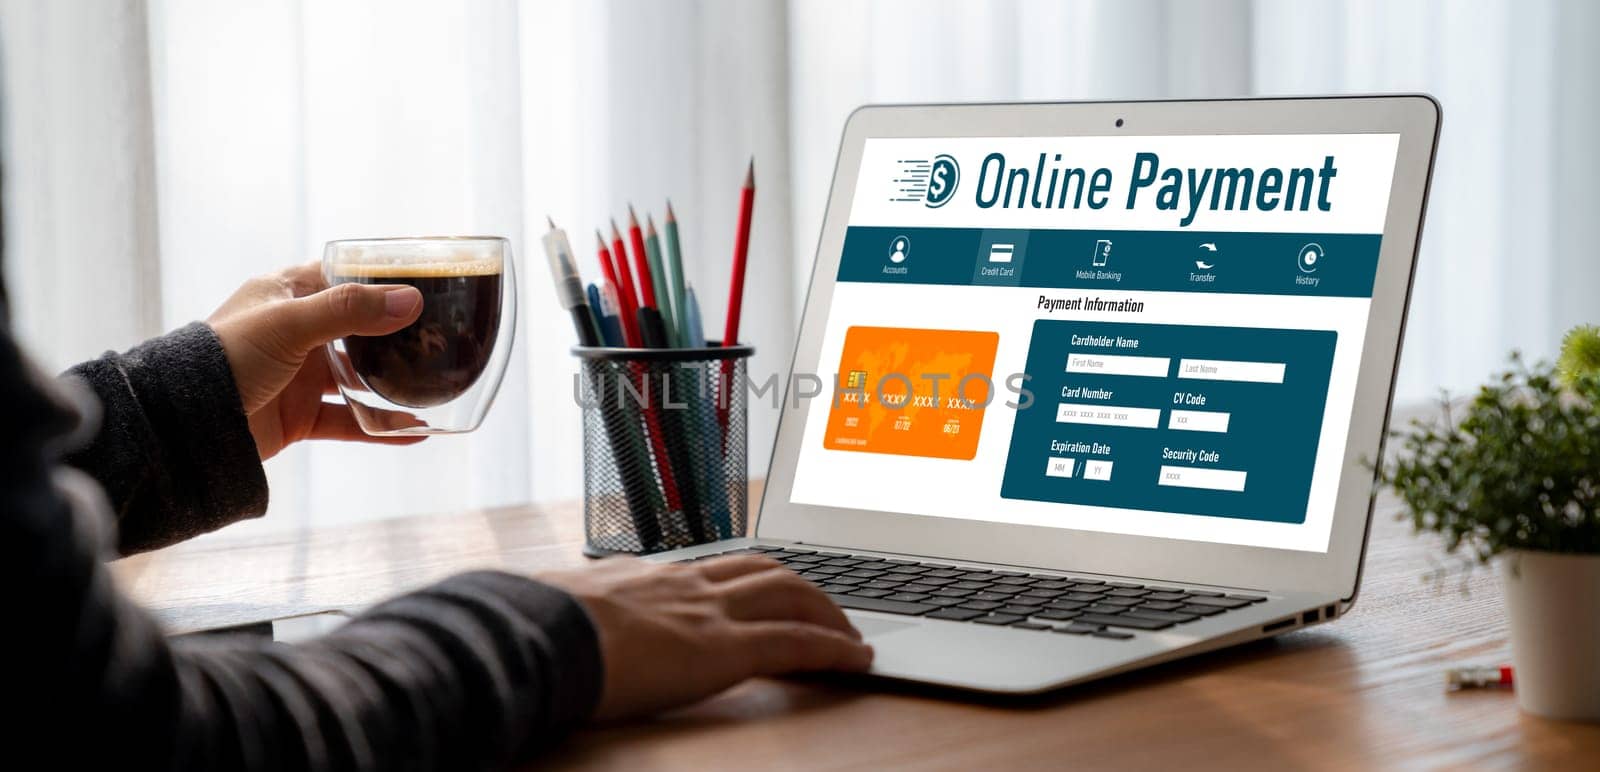 Online payment platform for modish money transfer by biancoblue